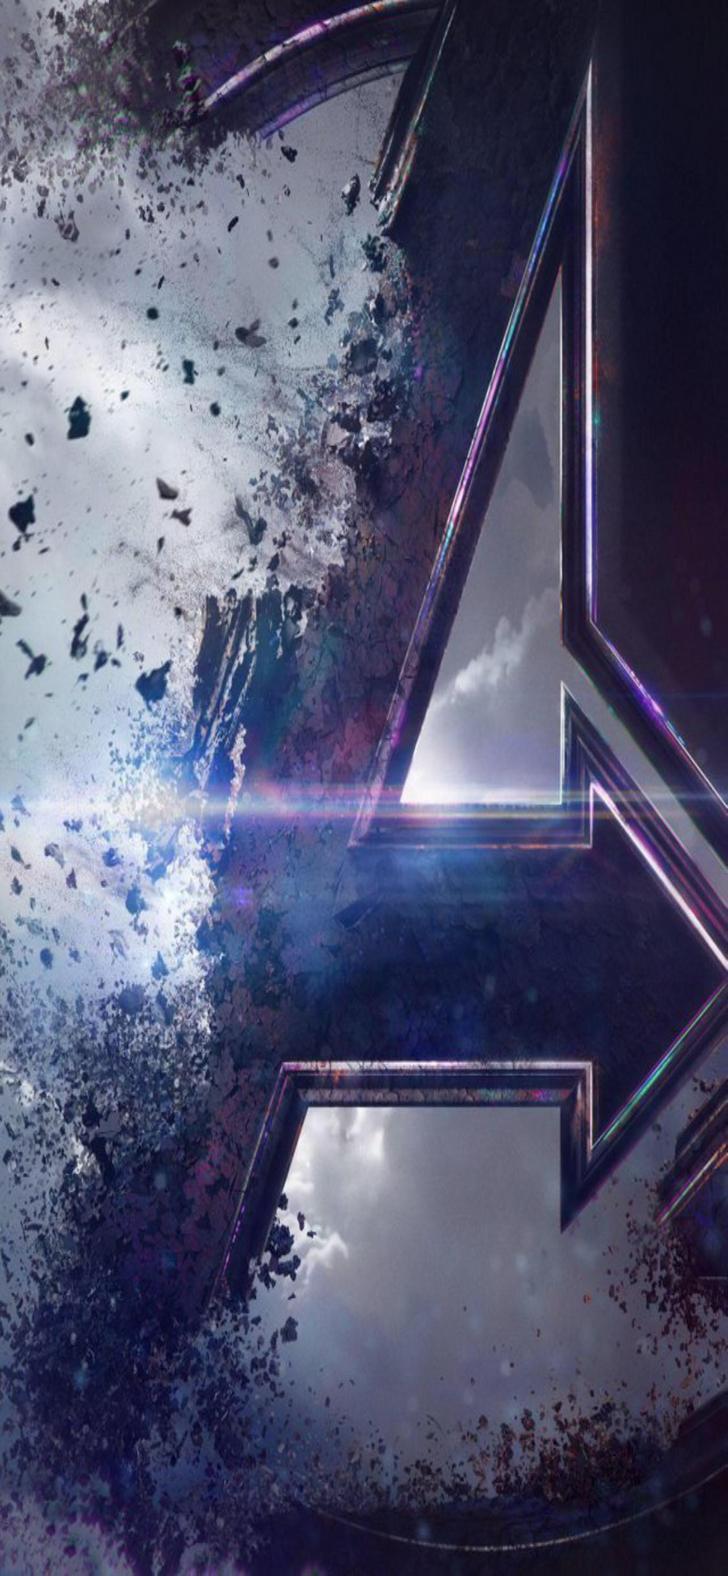 Avengers: Endgame Poster Wallpaper for iPhone X or 10